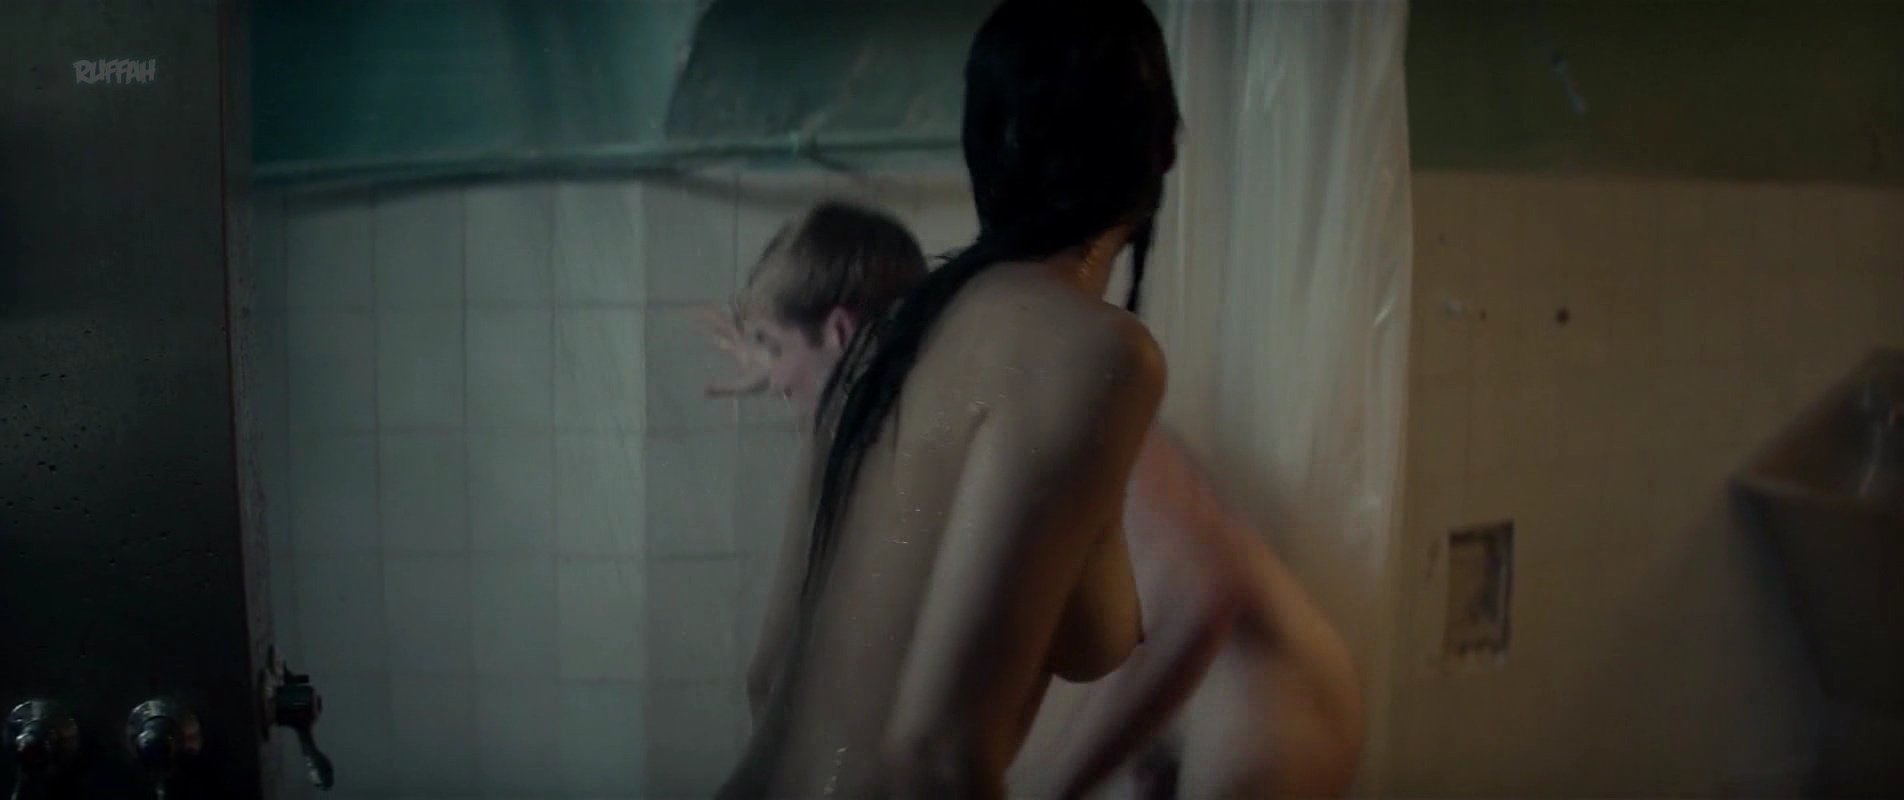 Boobs Jennifer Lawrence Nude Pic